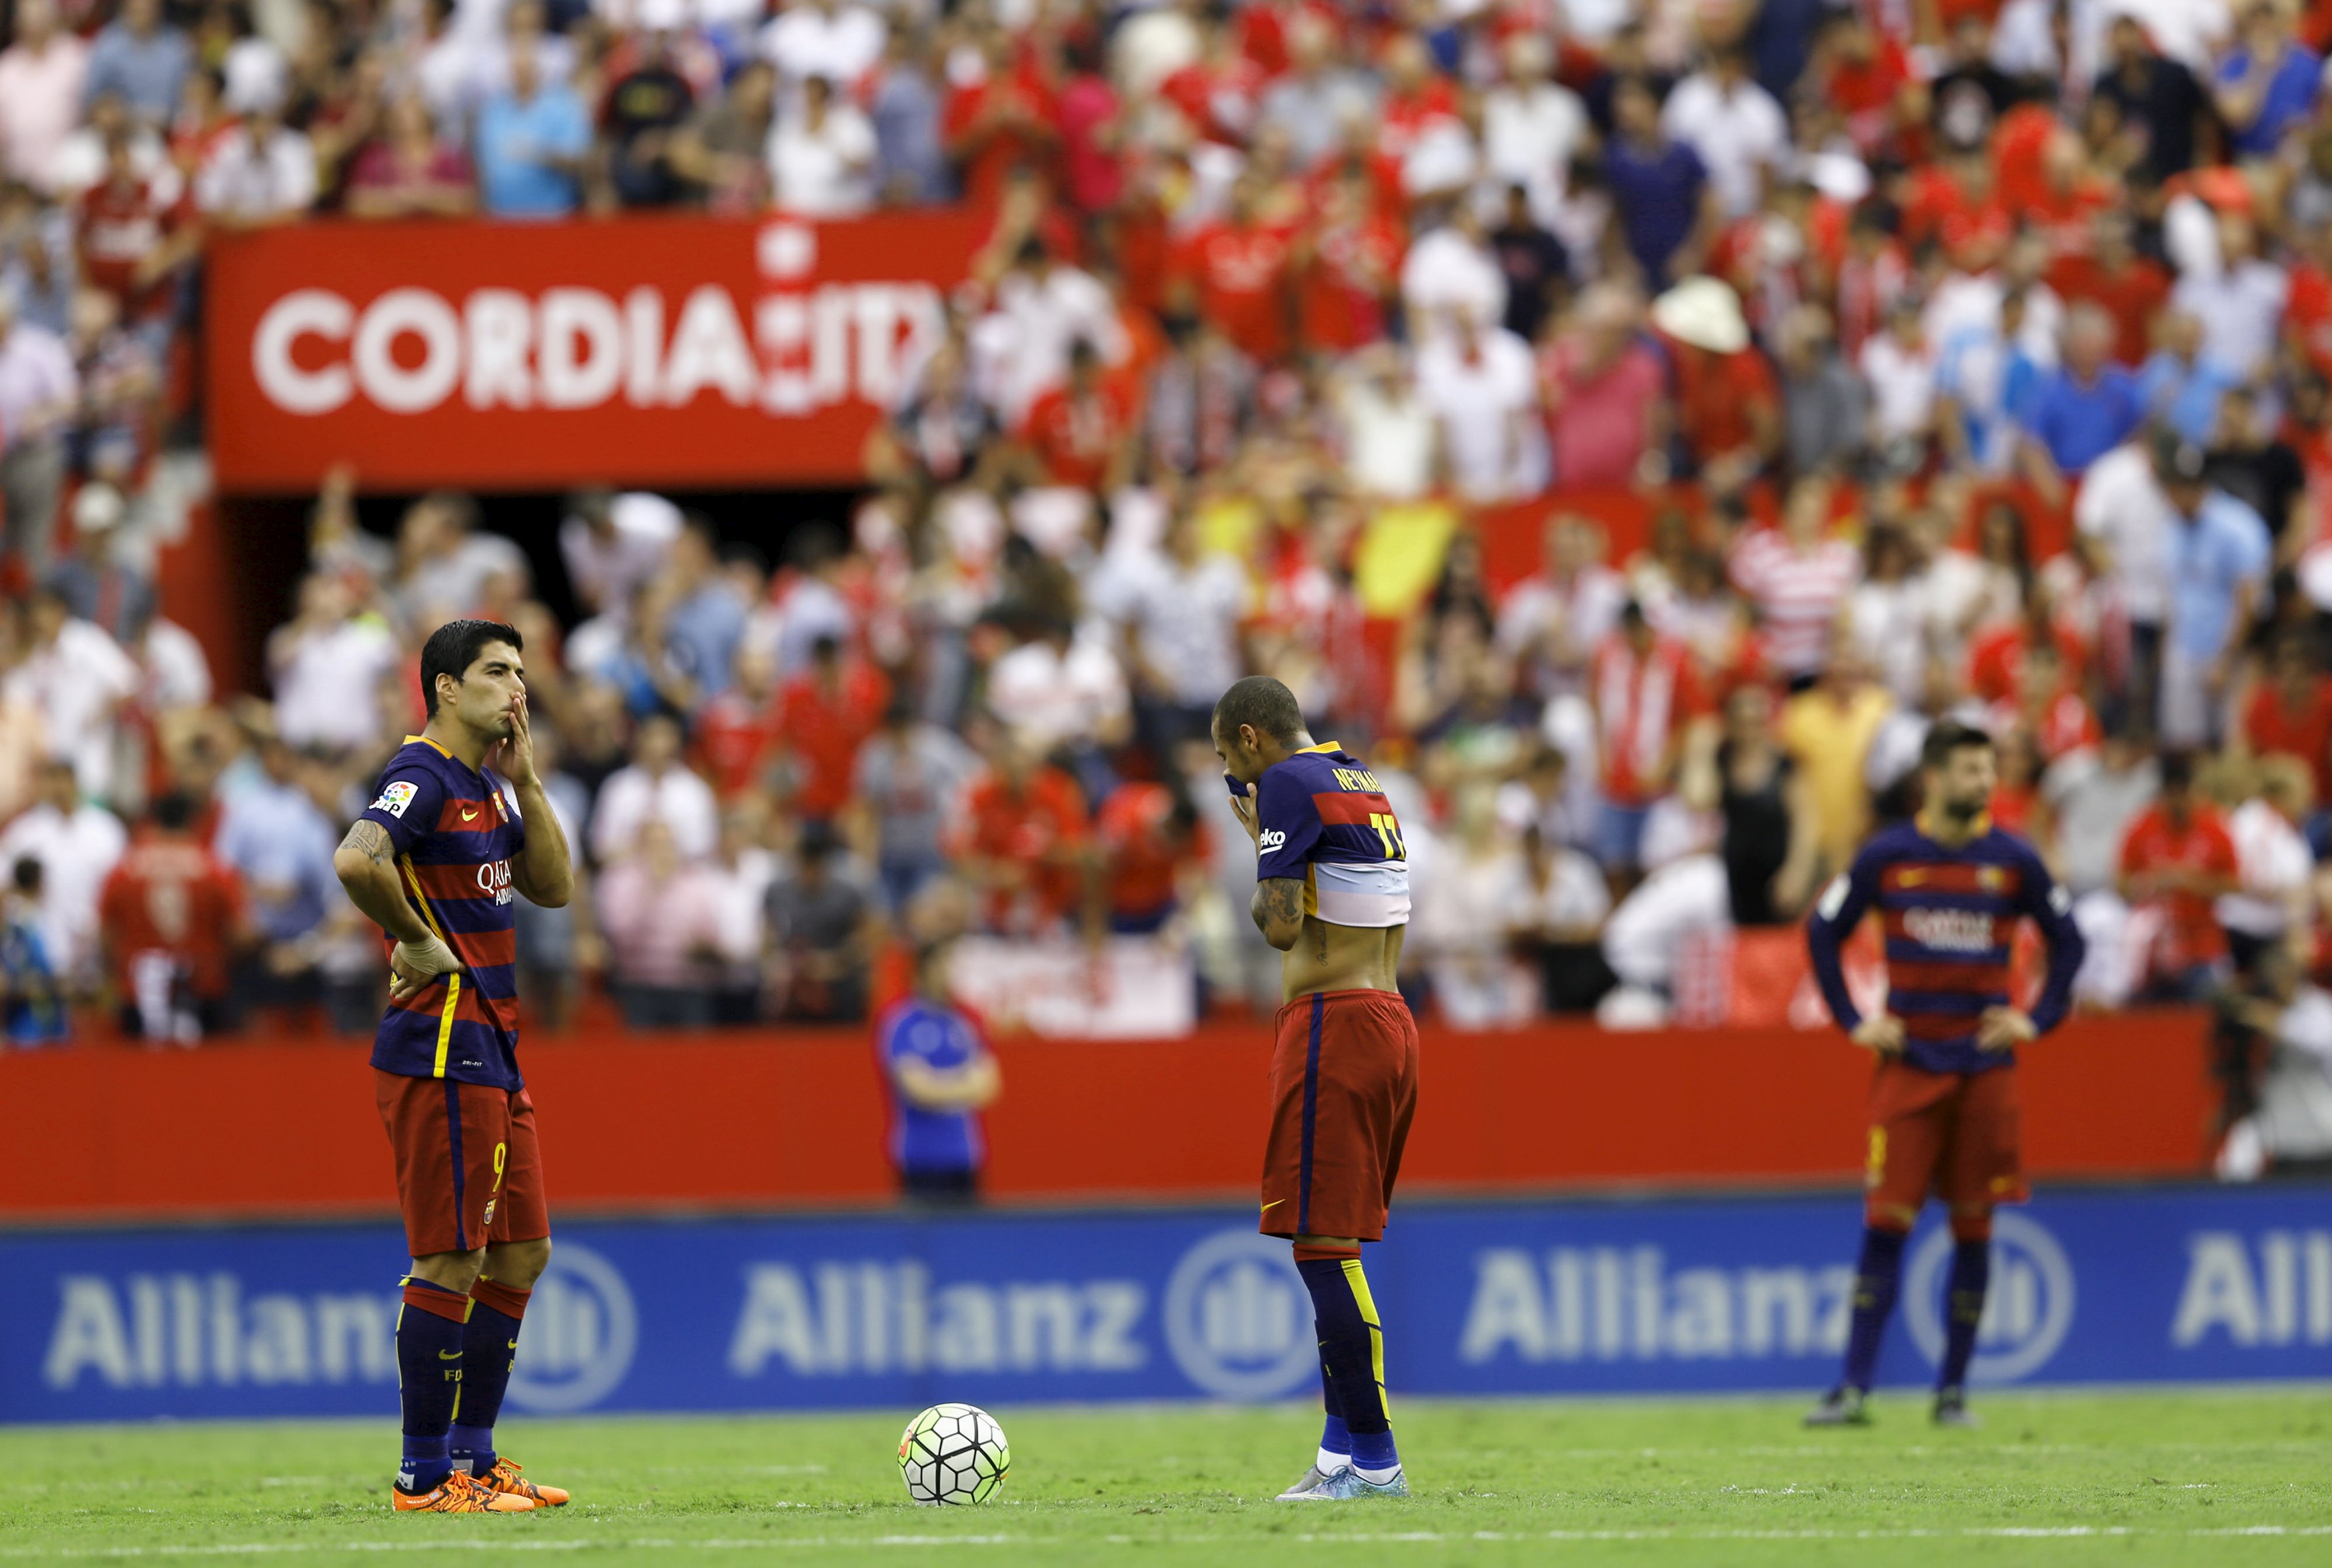 Tanpa Messi, Kini Barca Jadi Musuh Bersama